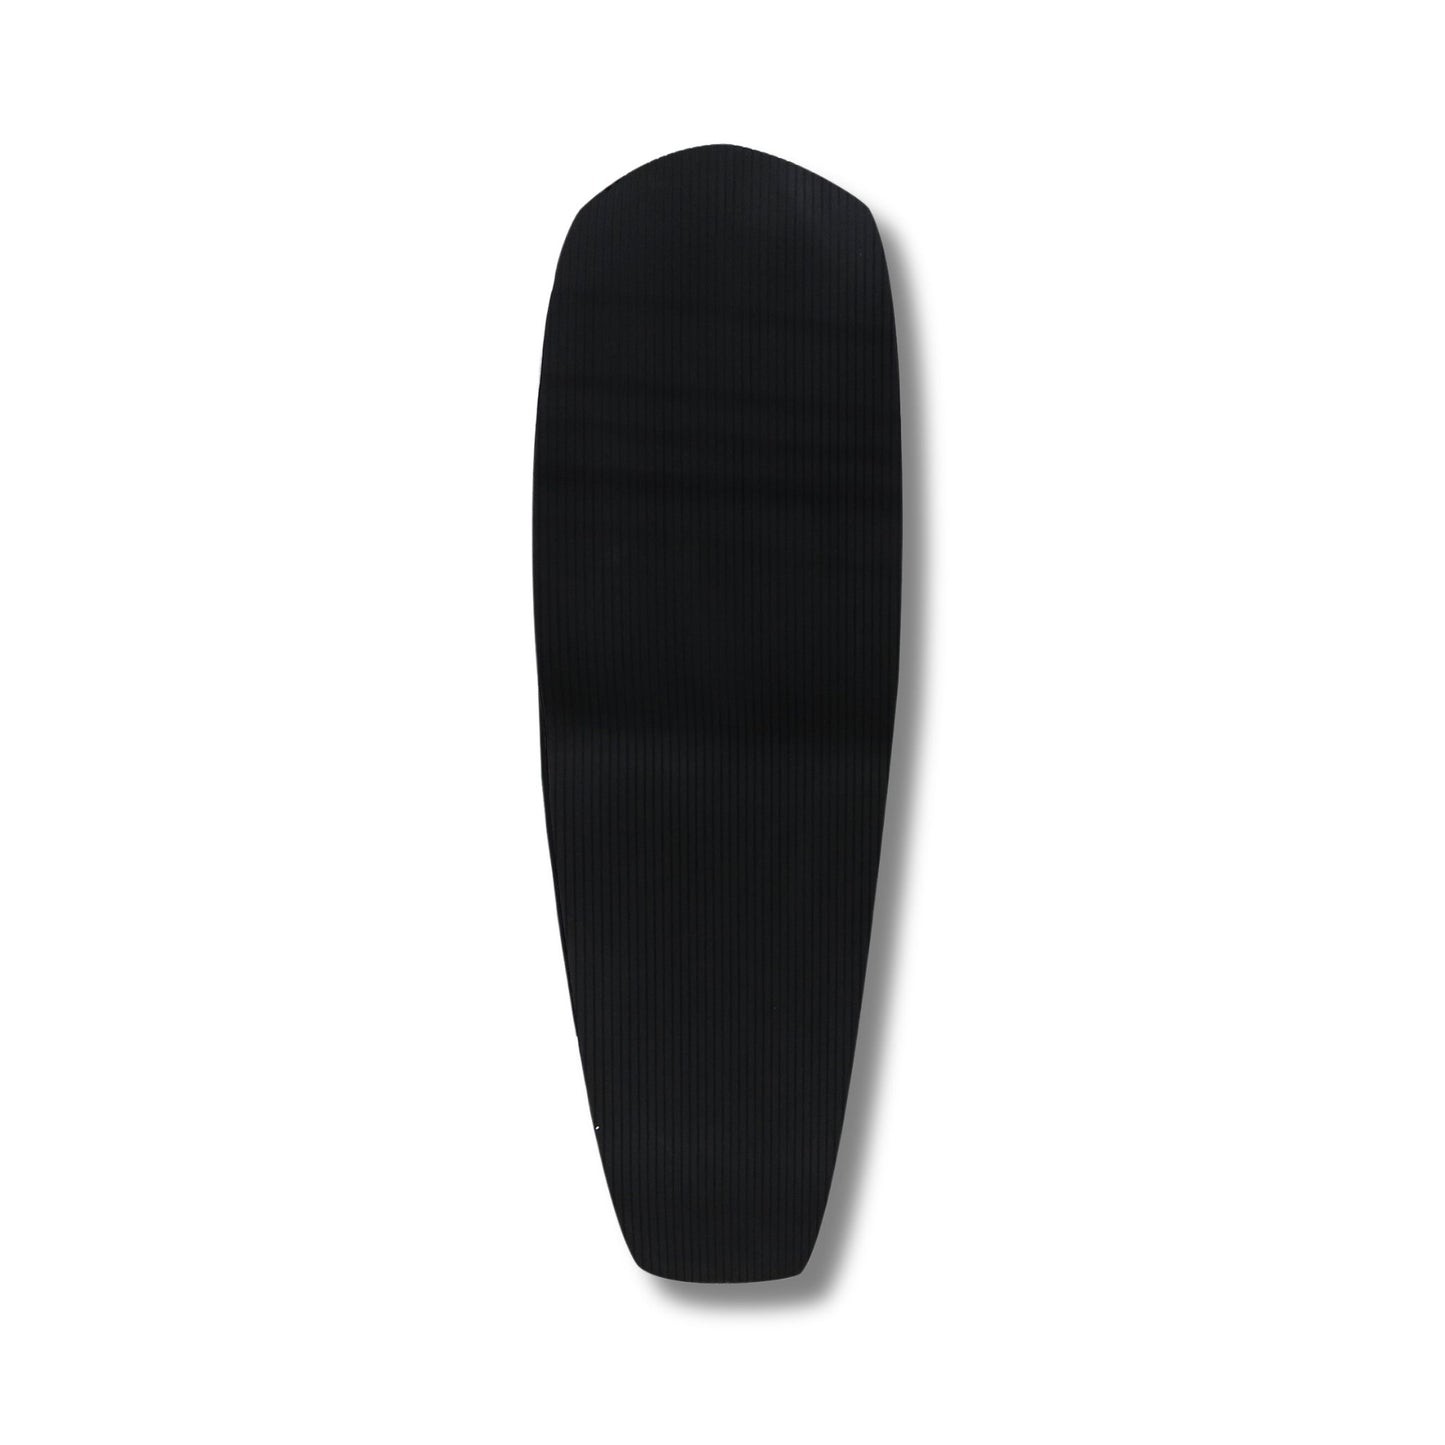 Priority SUP Deck Pad Premium EVA Pad Grip Foam with 3M Adhesive